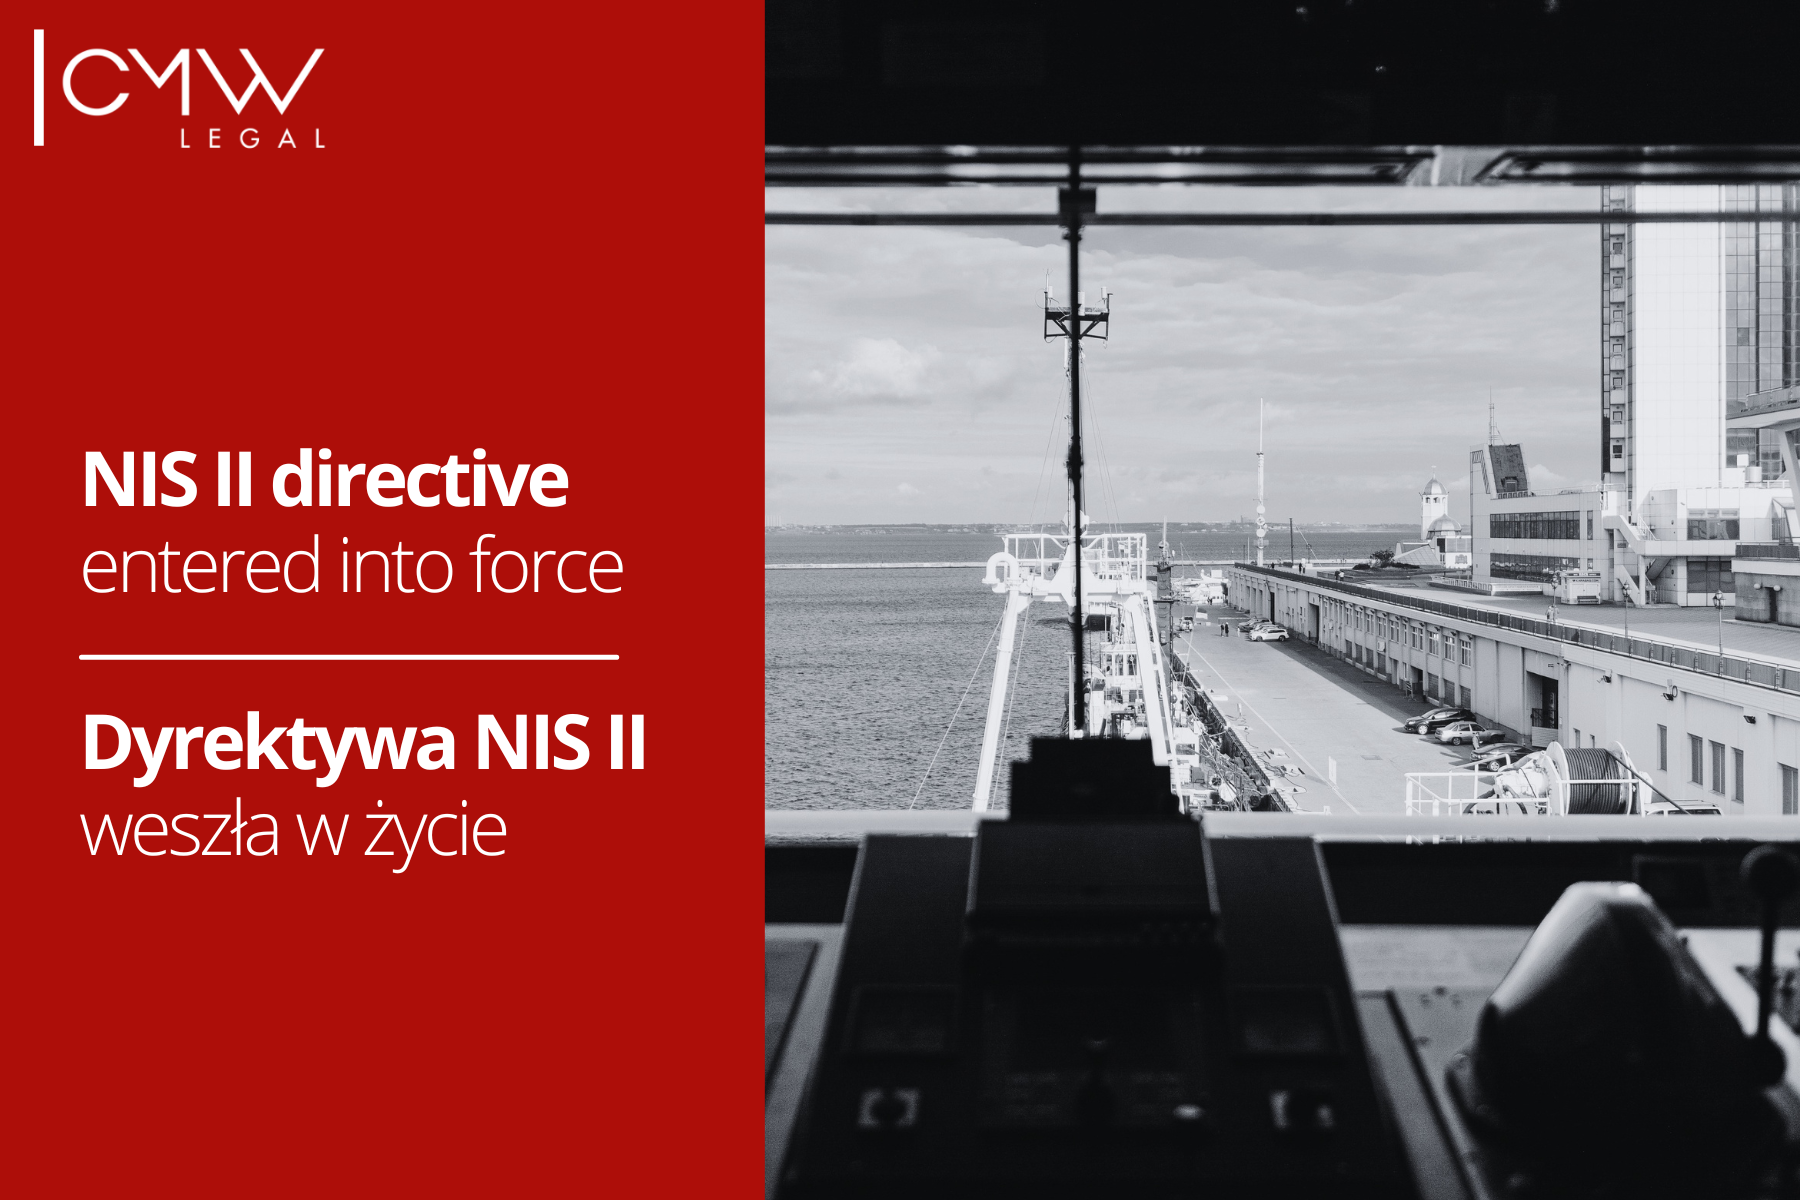  NIS II directive published